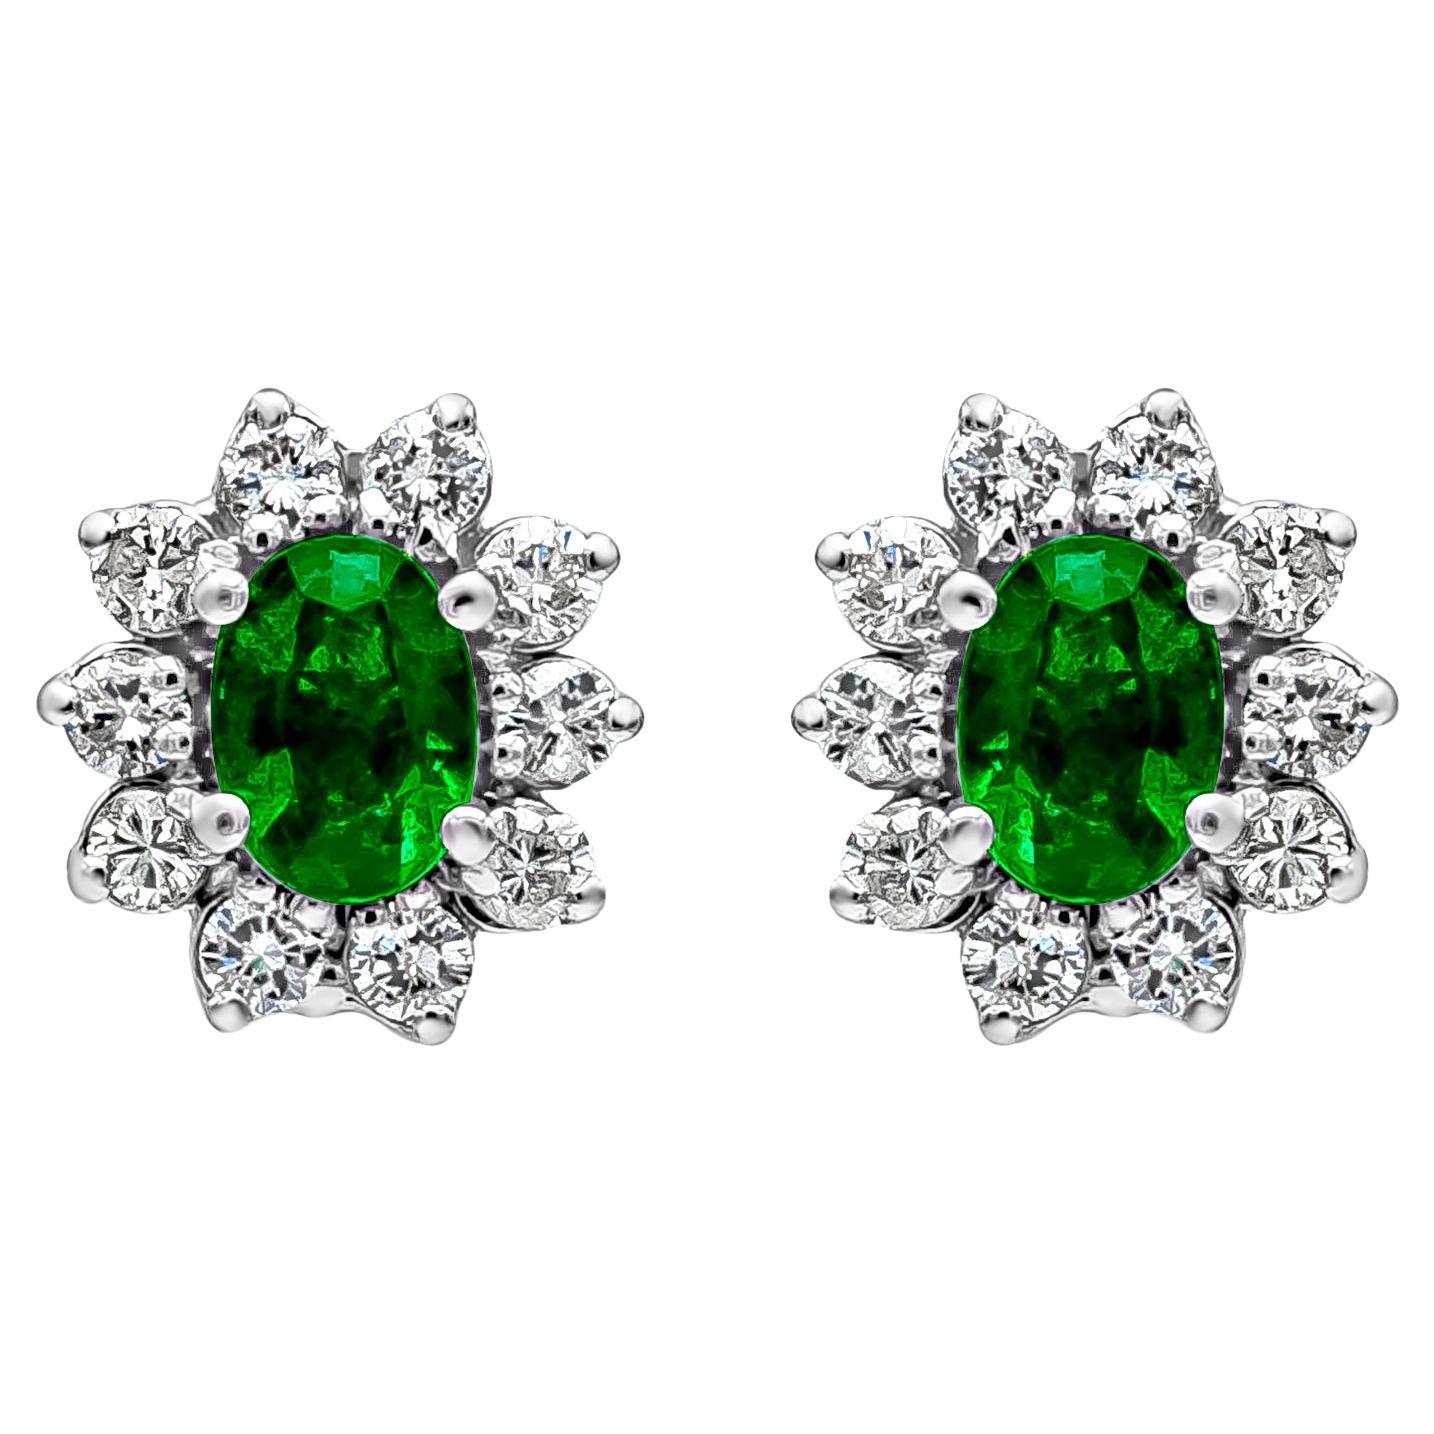 Roman Malakov 1.52 Carats Total Green Emerald and Diamond Halo Stud Earrings For Sale